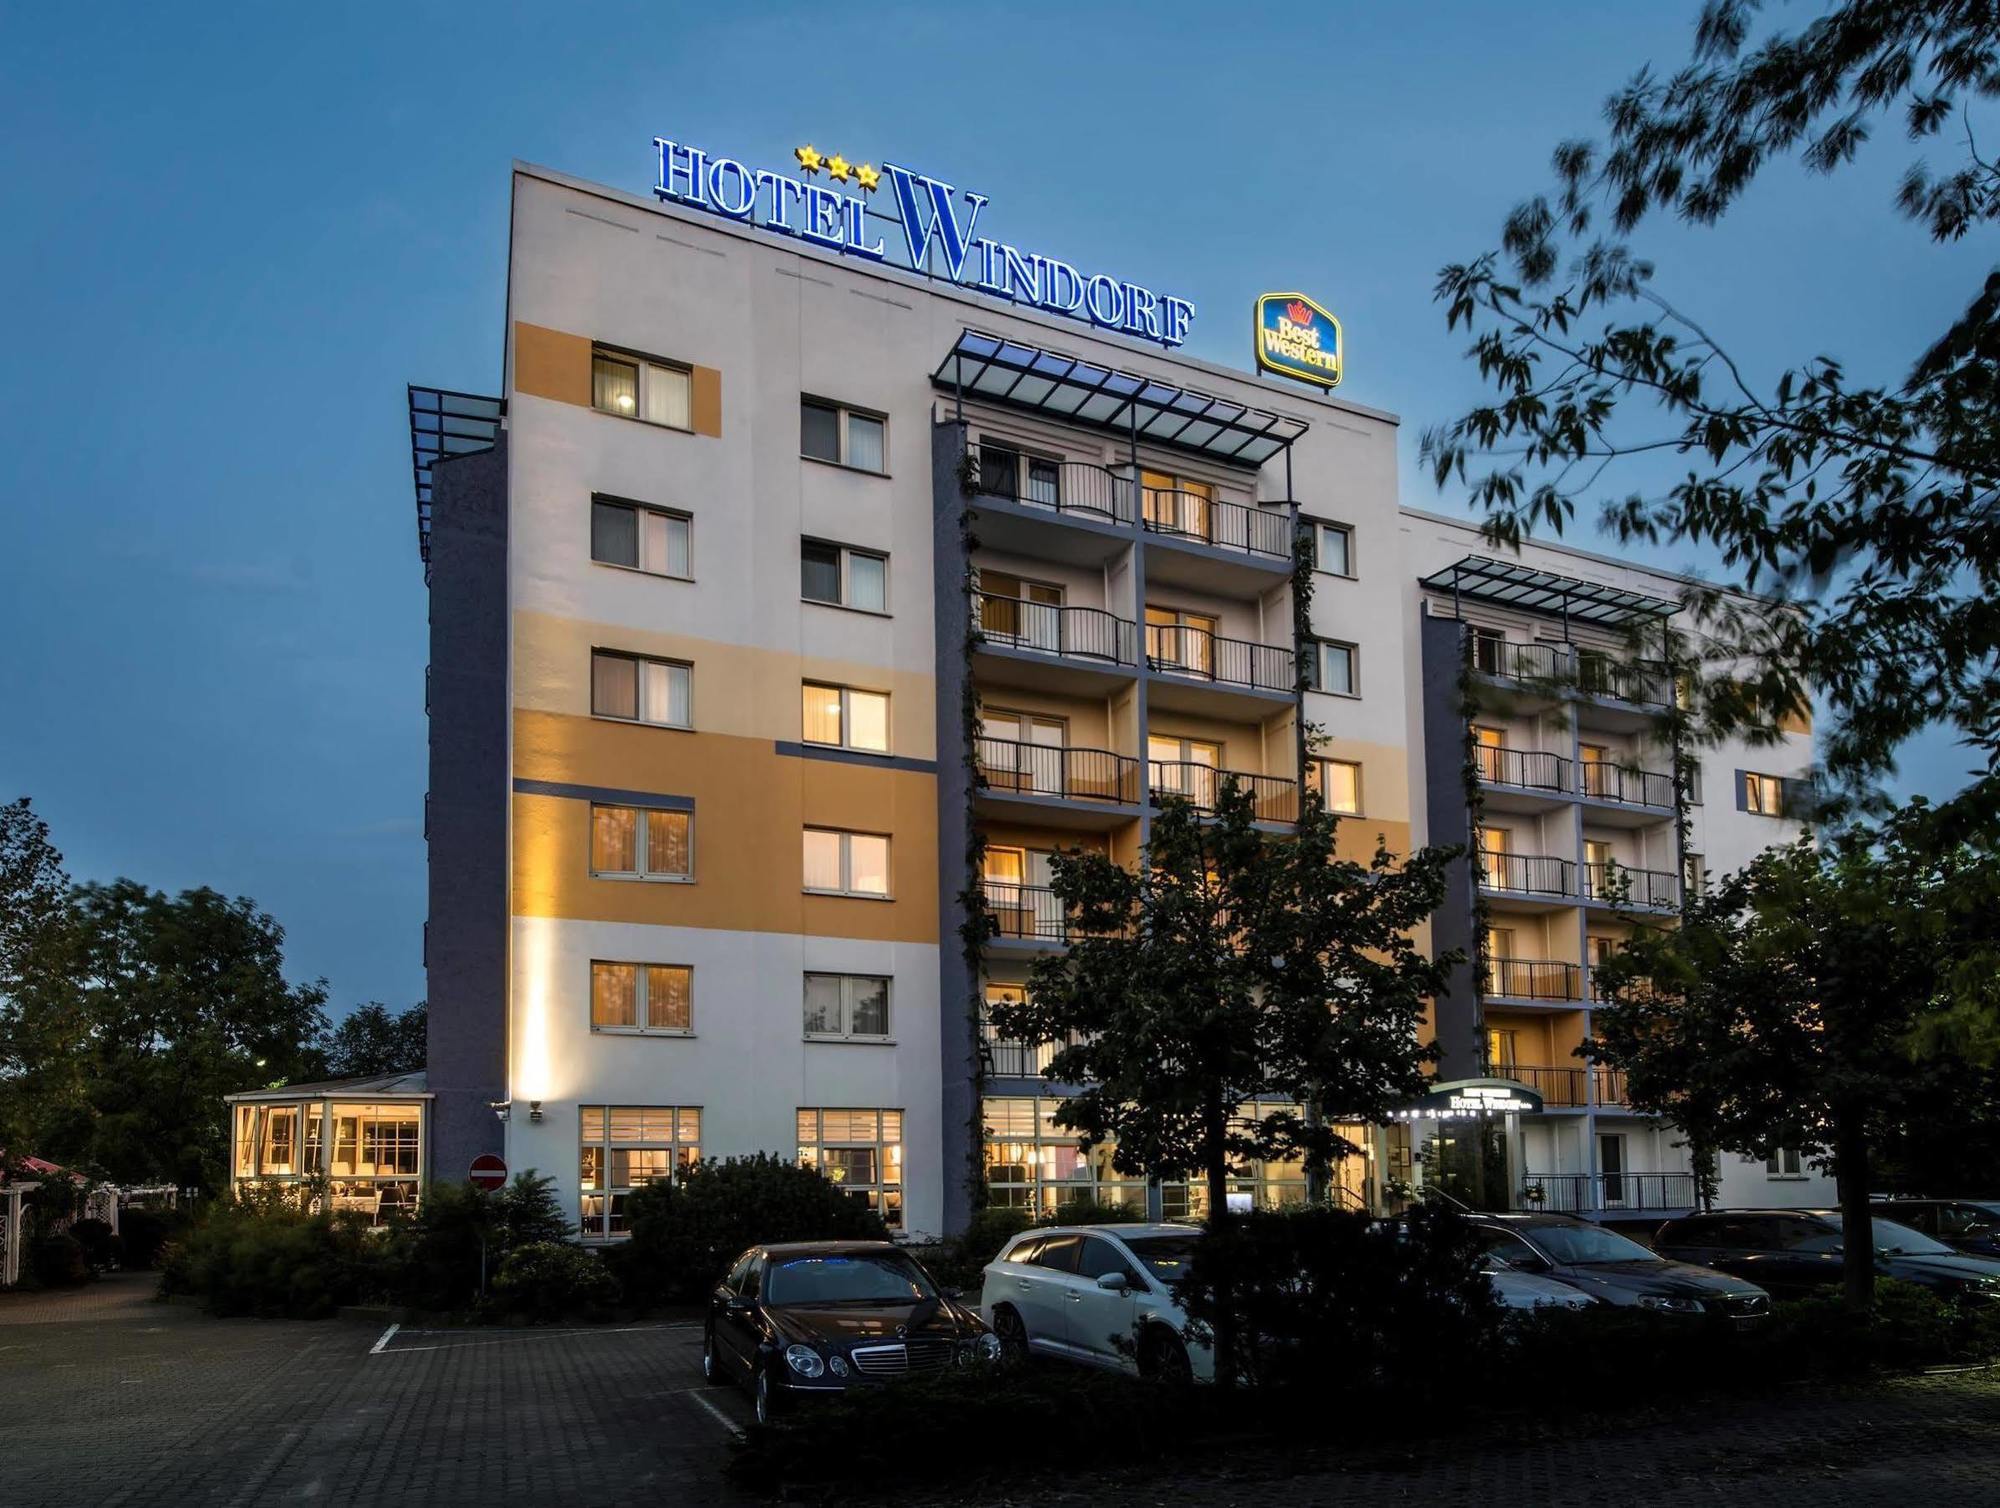 Best Western Hotel Windorf Leipzig Exterior photo